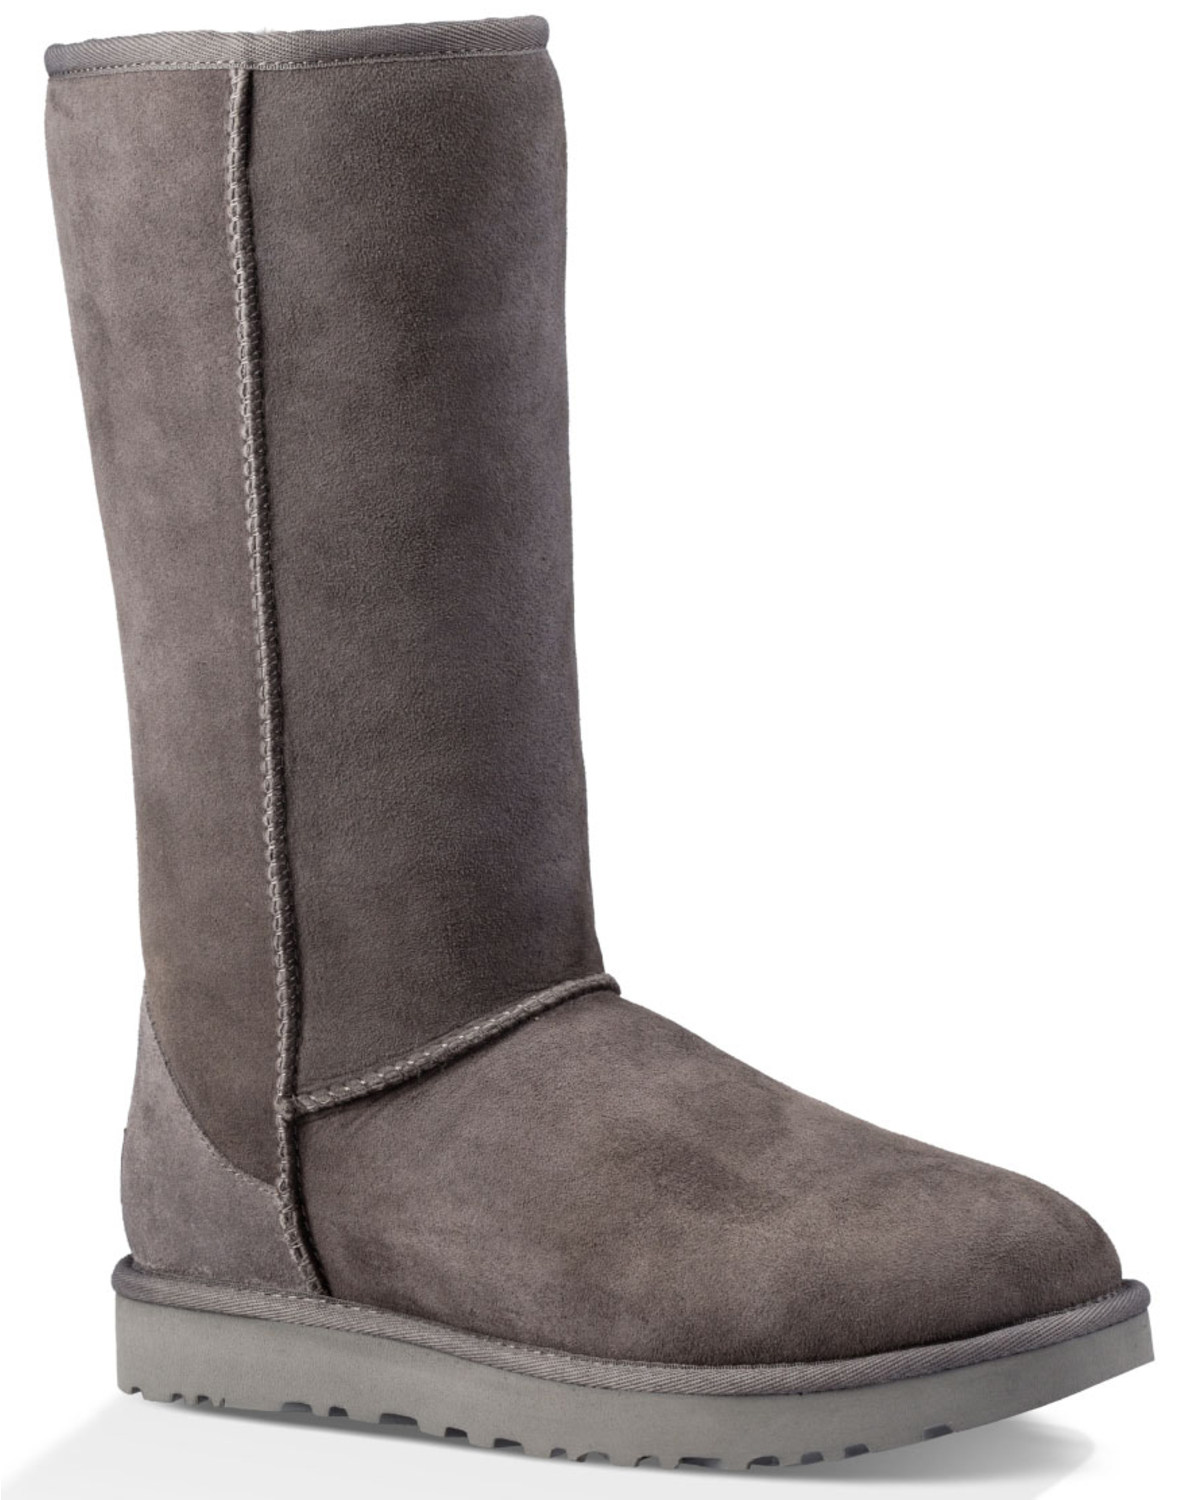 grey tall boot